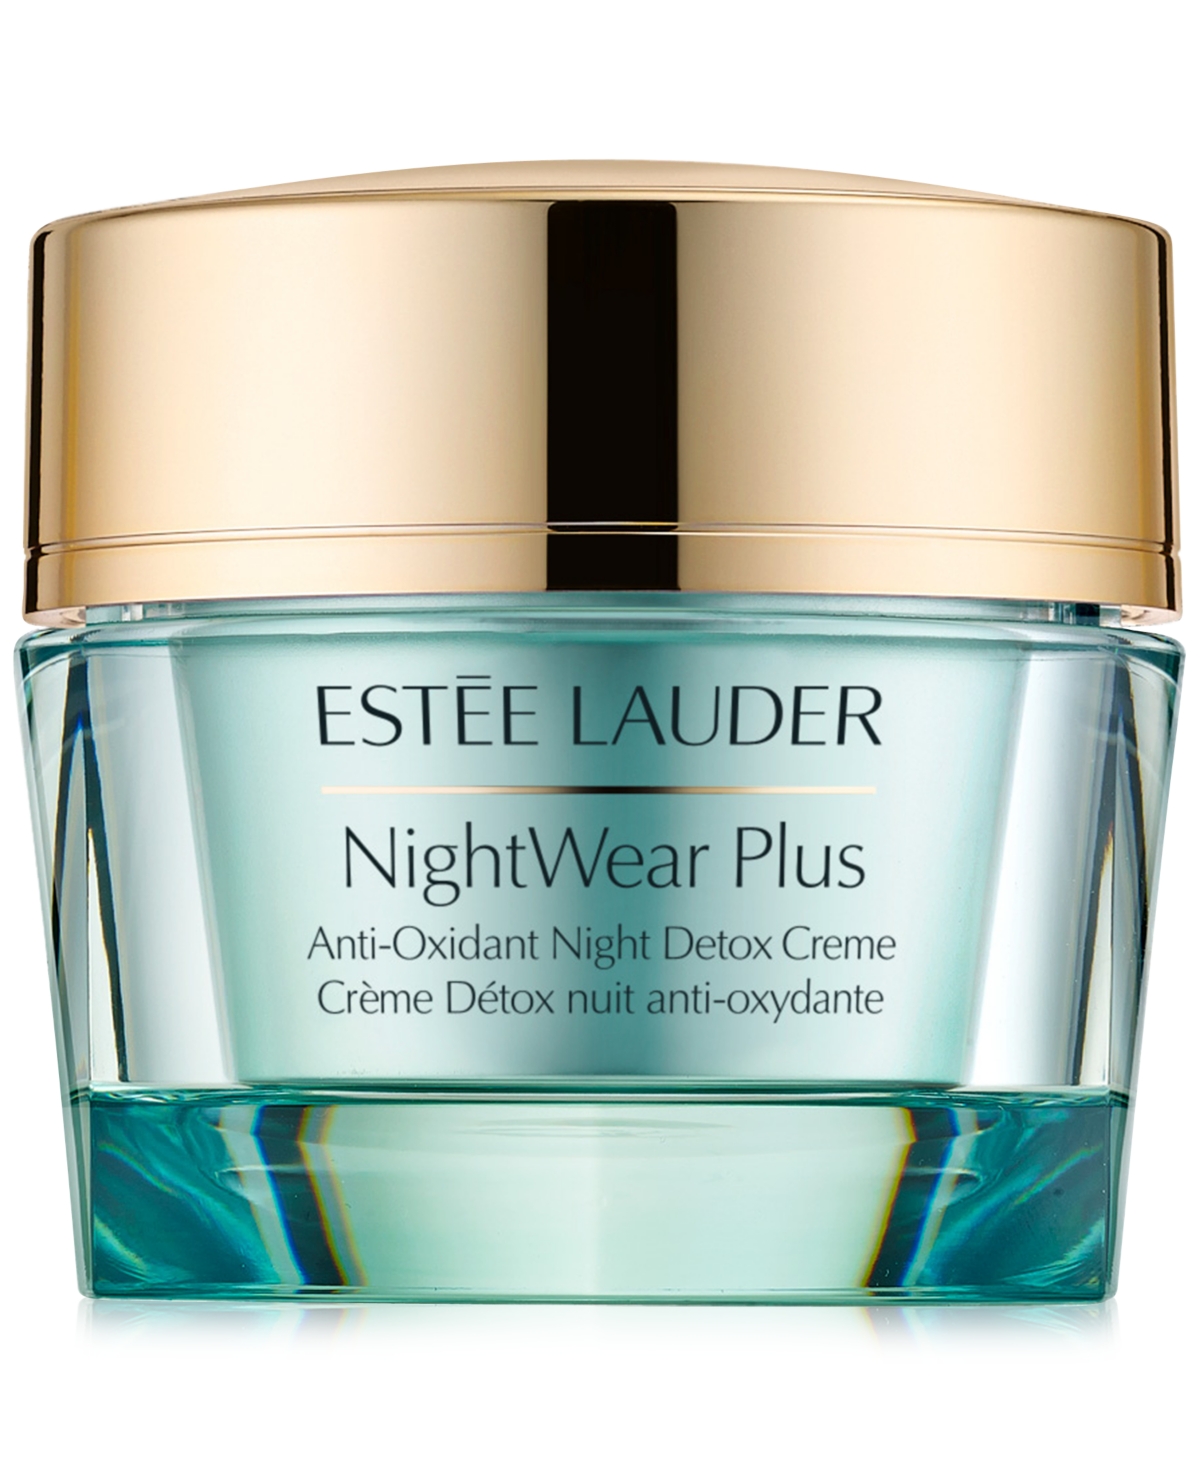 NightWear Plus Anti-Oxidant Night Detox Face Cream Moisturizer, 1.7 oz